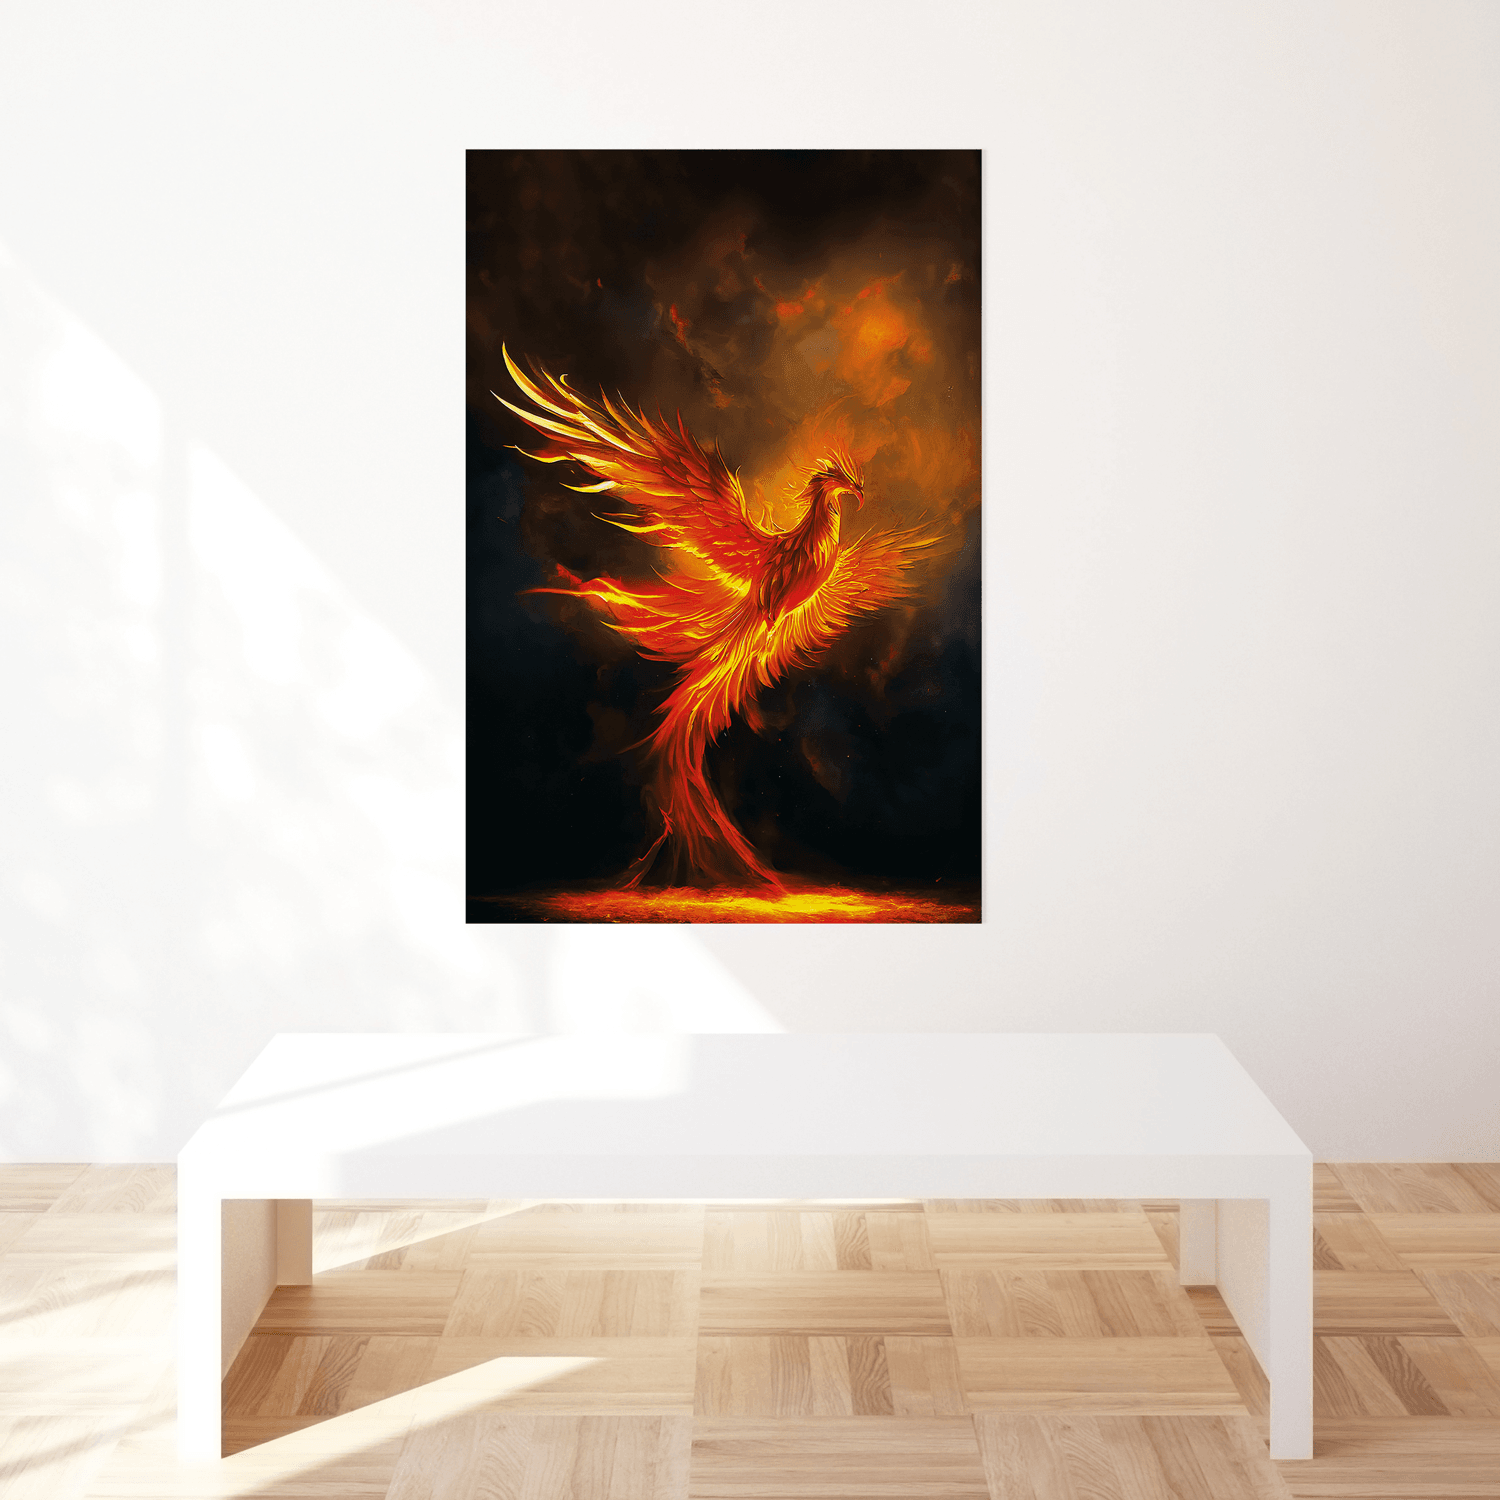 Yanan Anka Kuşu-Burning Phoenix